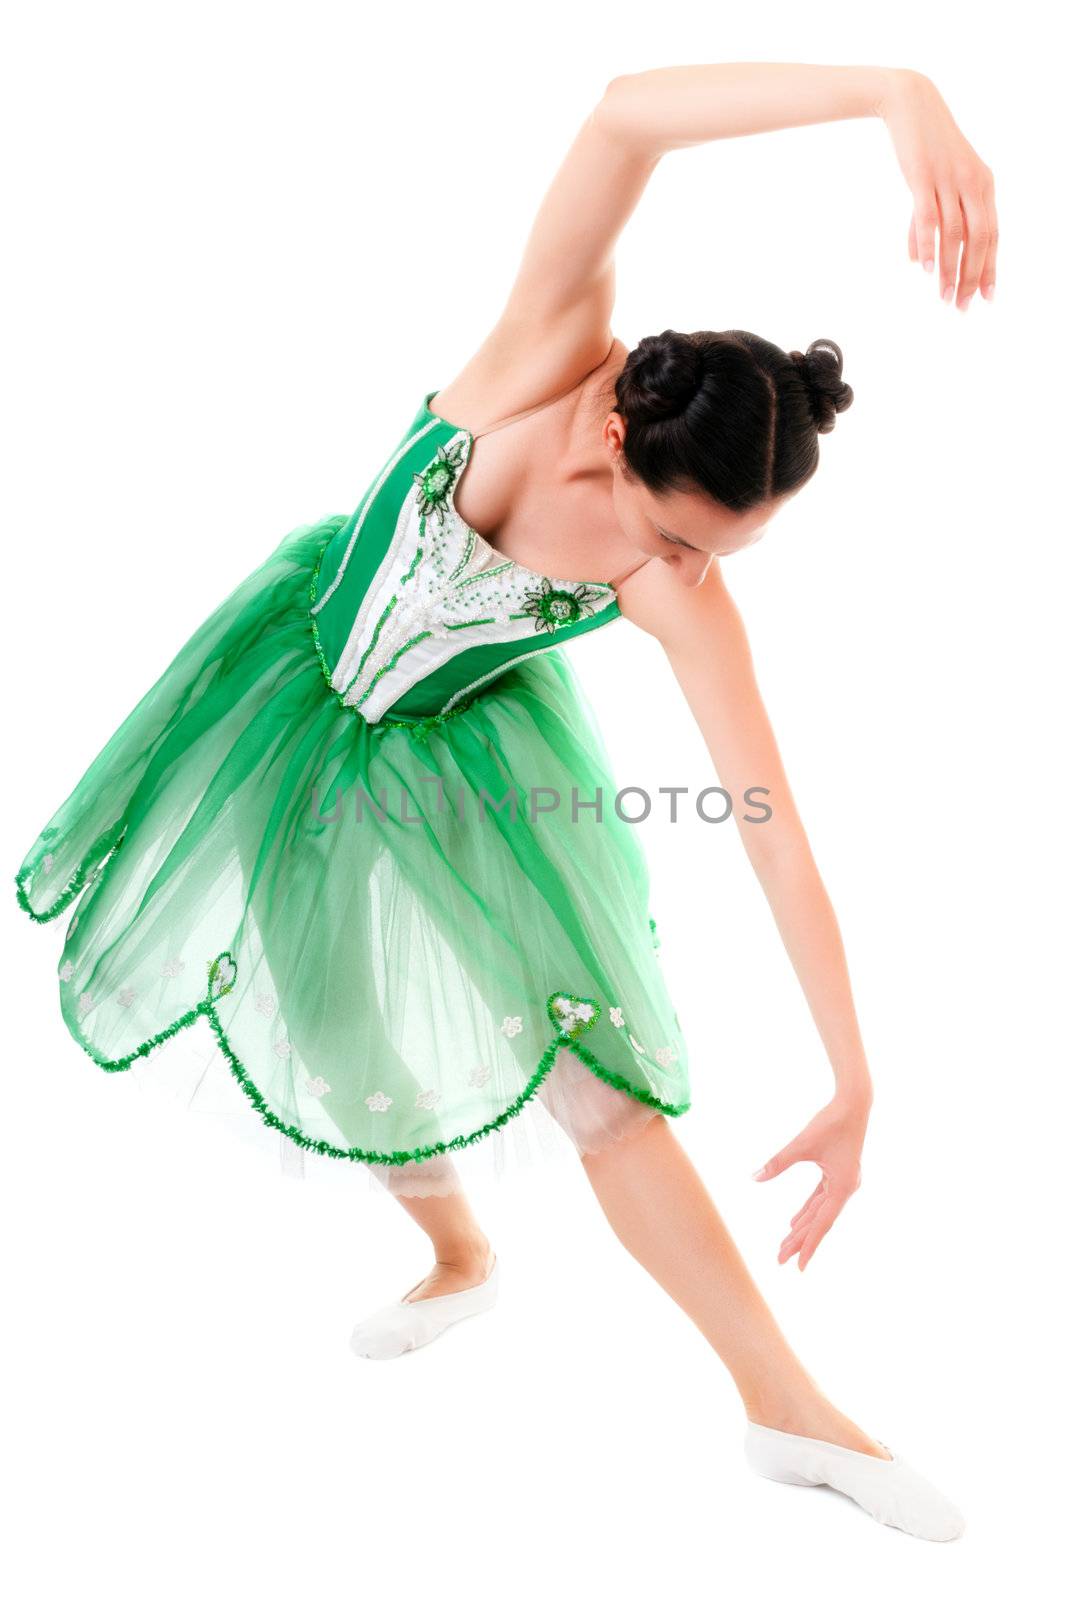 Ballerina by iryna_rasko